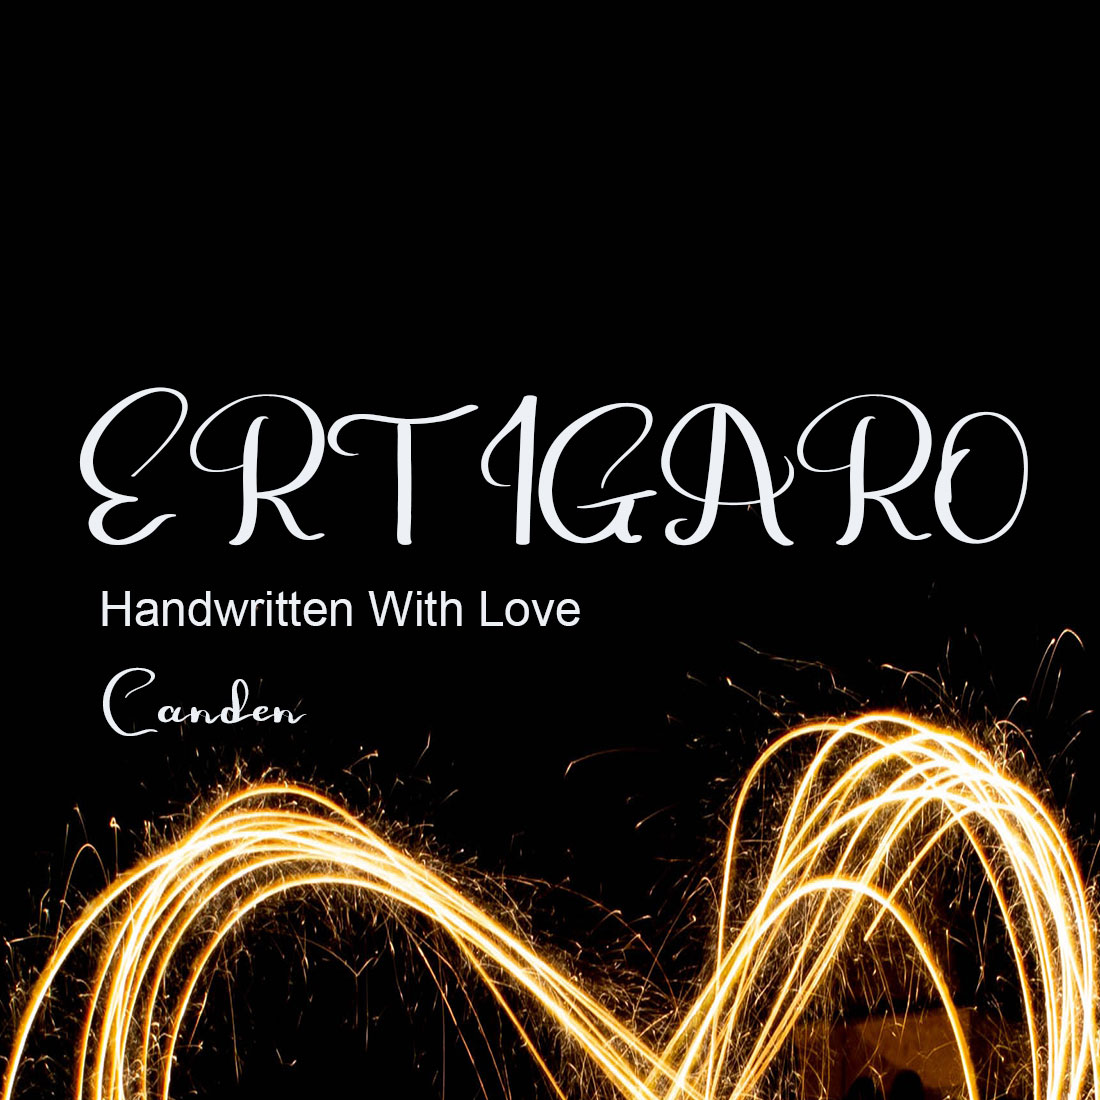 ERTIGARO Simple Handwritten Font - Only $18 cover image.